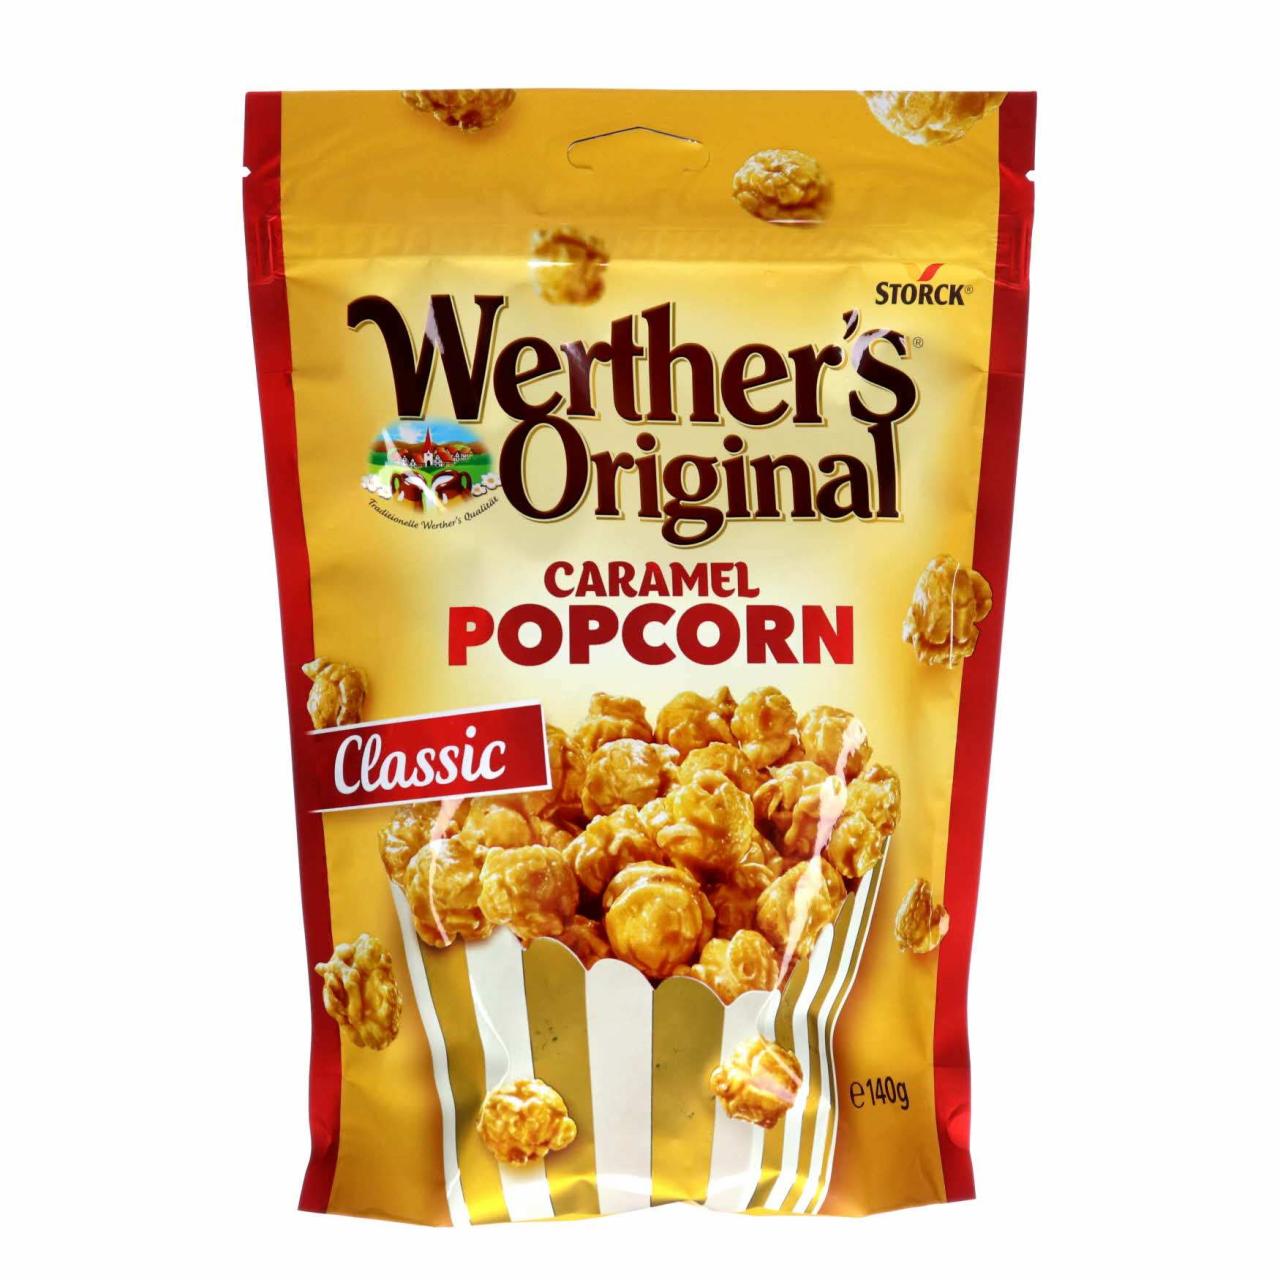 Storck Werther's Original Caramel Popcorn Classic 140g